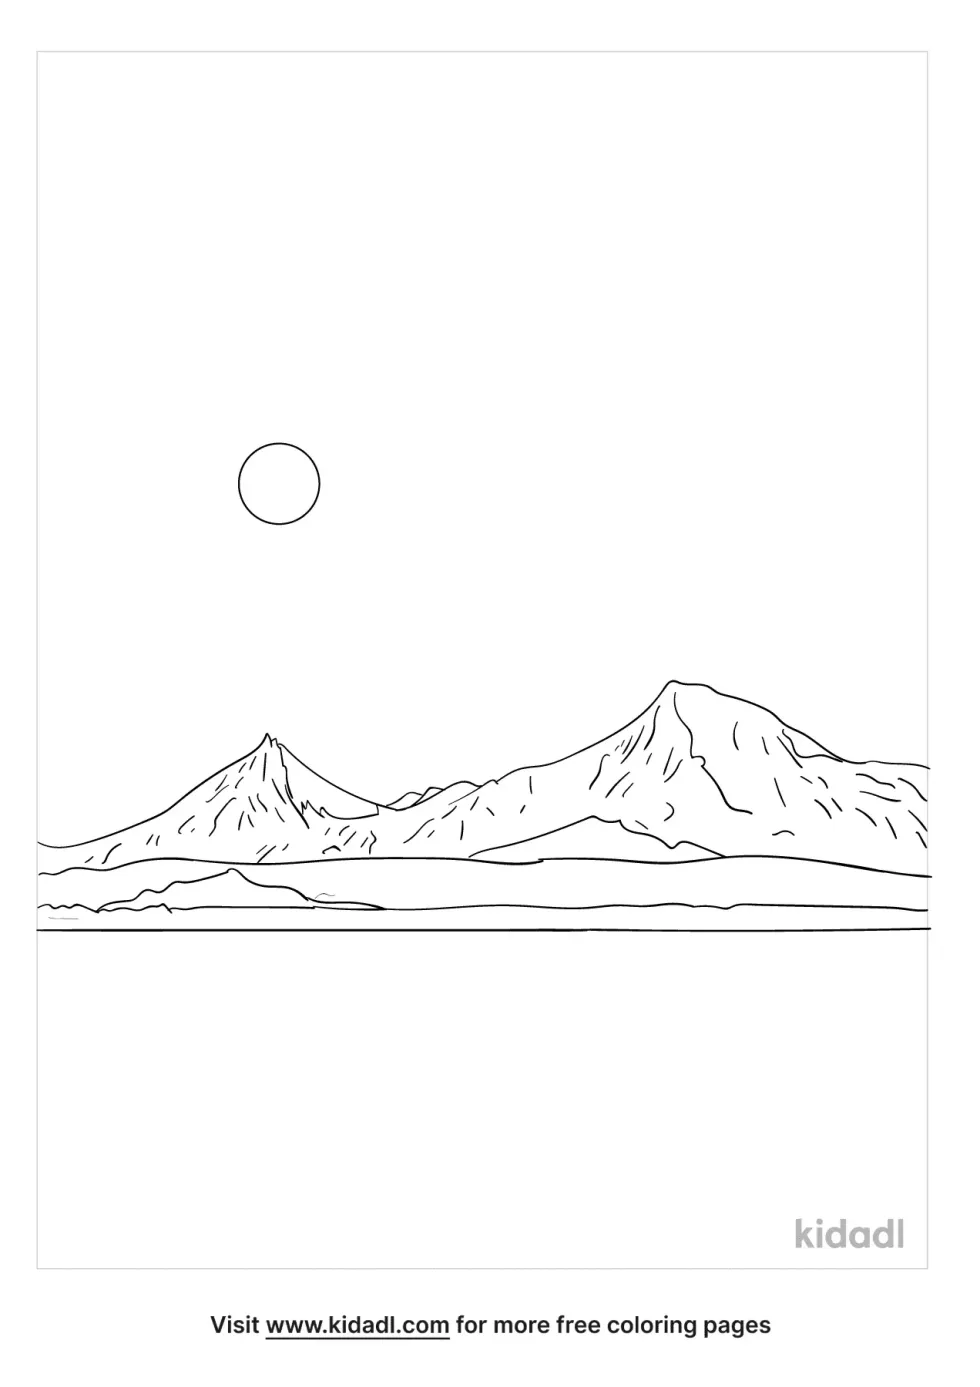 Armenia Mount Ararat